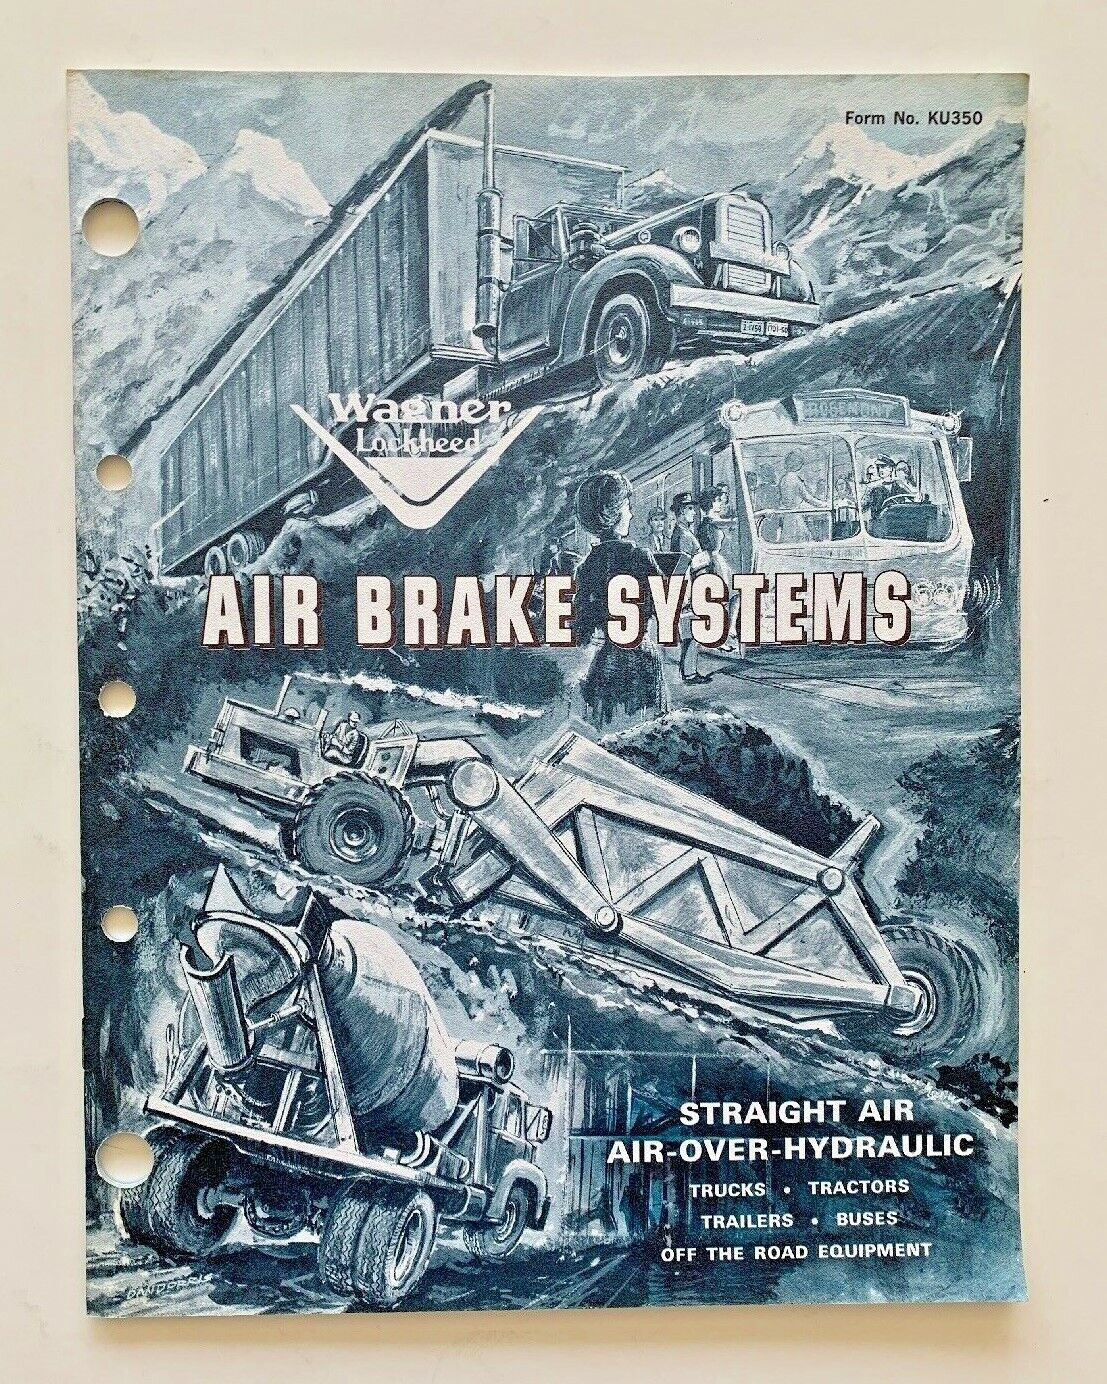 1964-wagner-lockheed-air-brake-system-catalog-form-ku350-for-sale